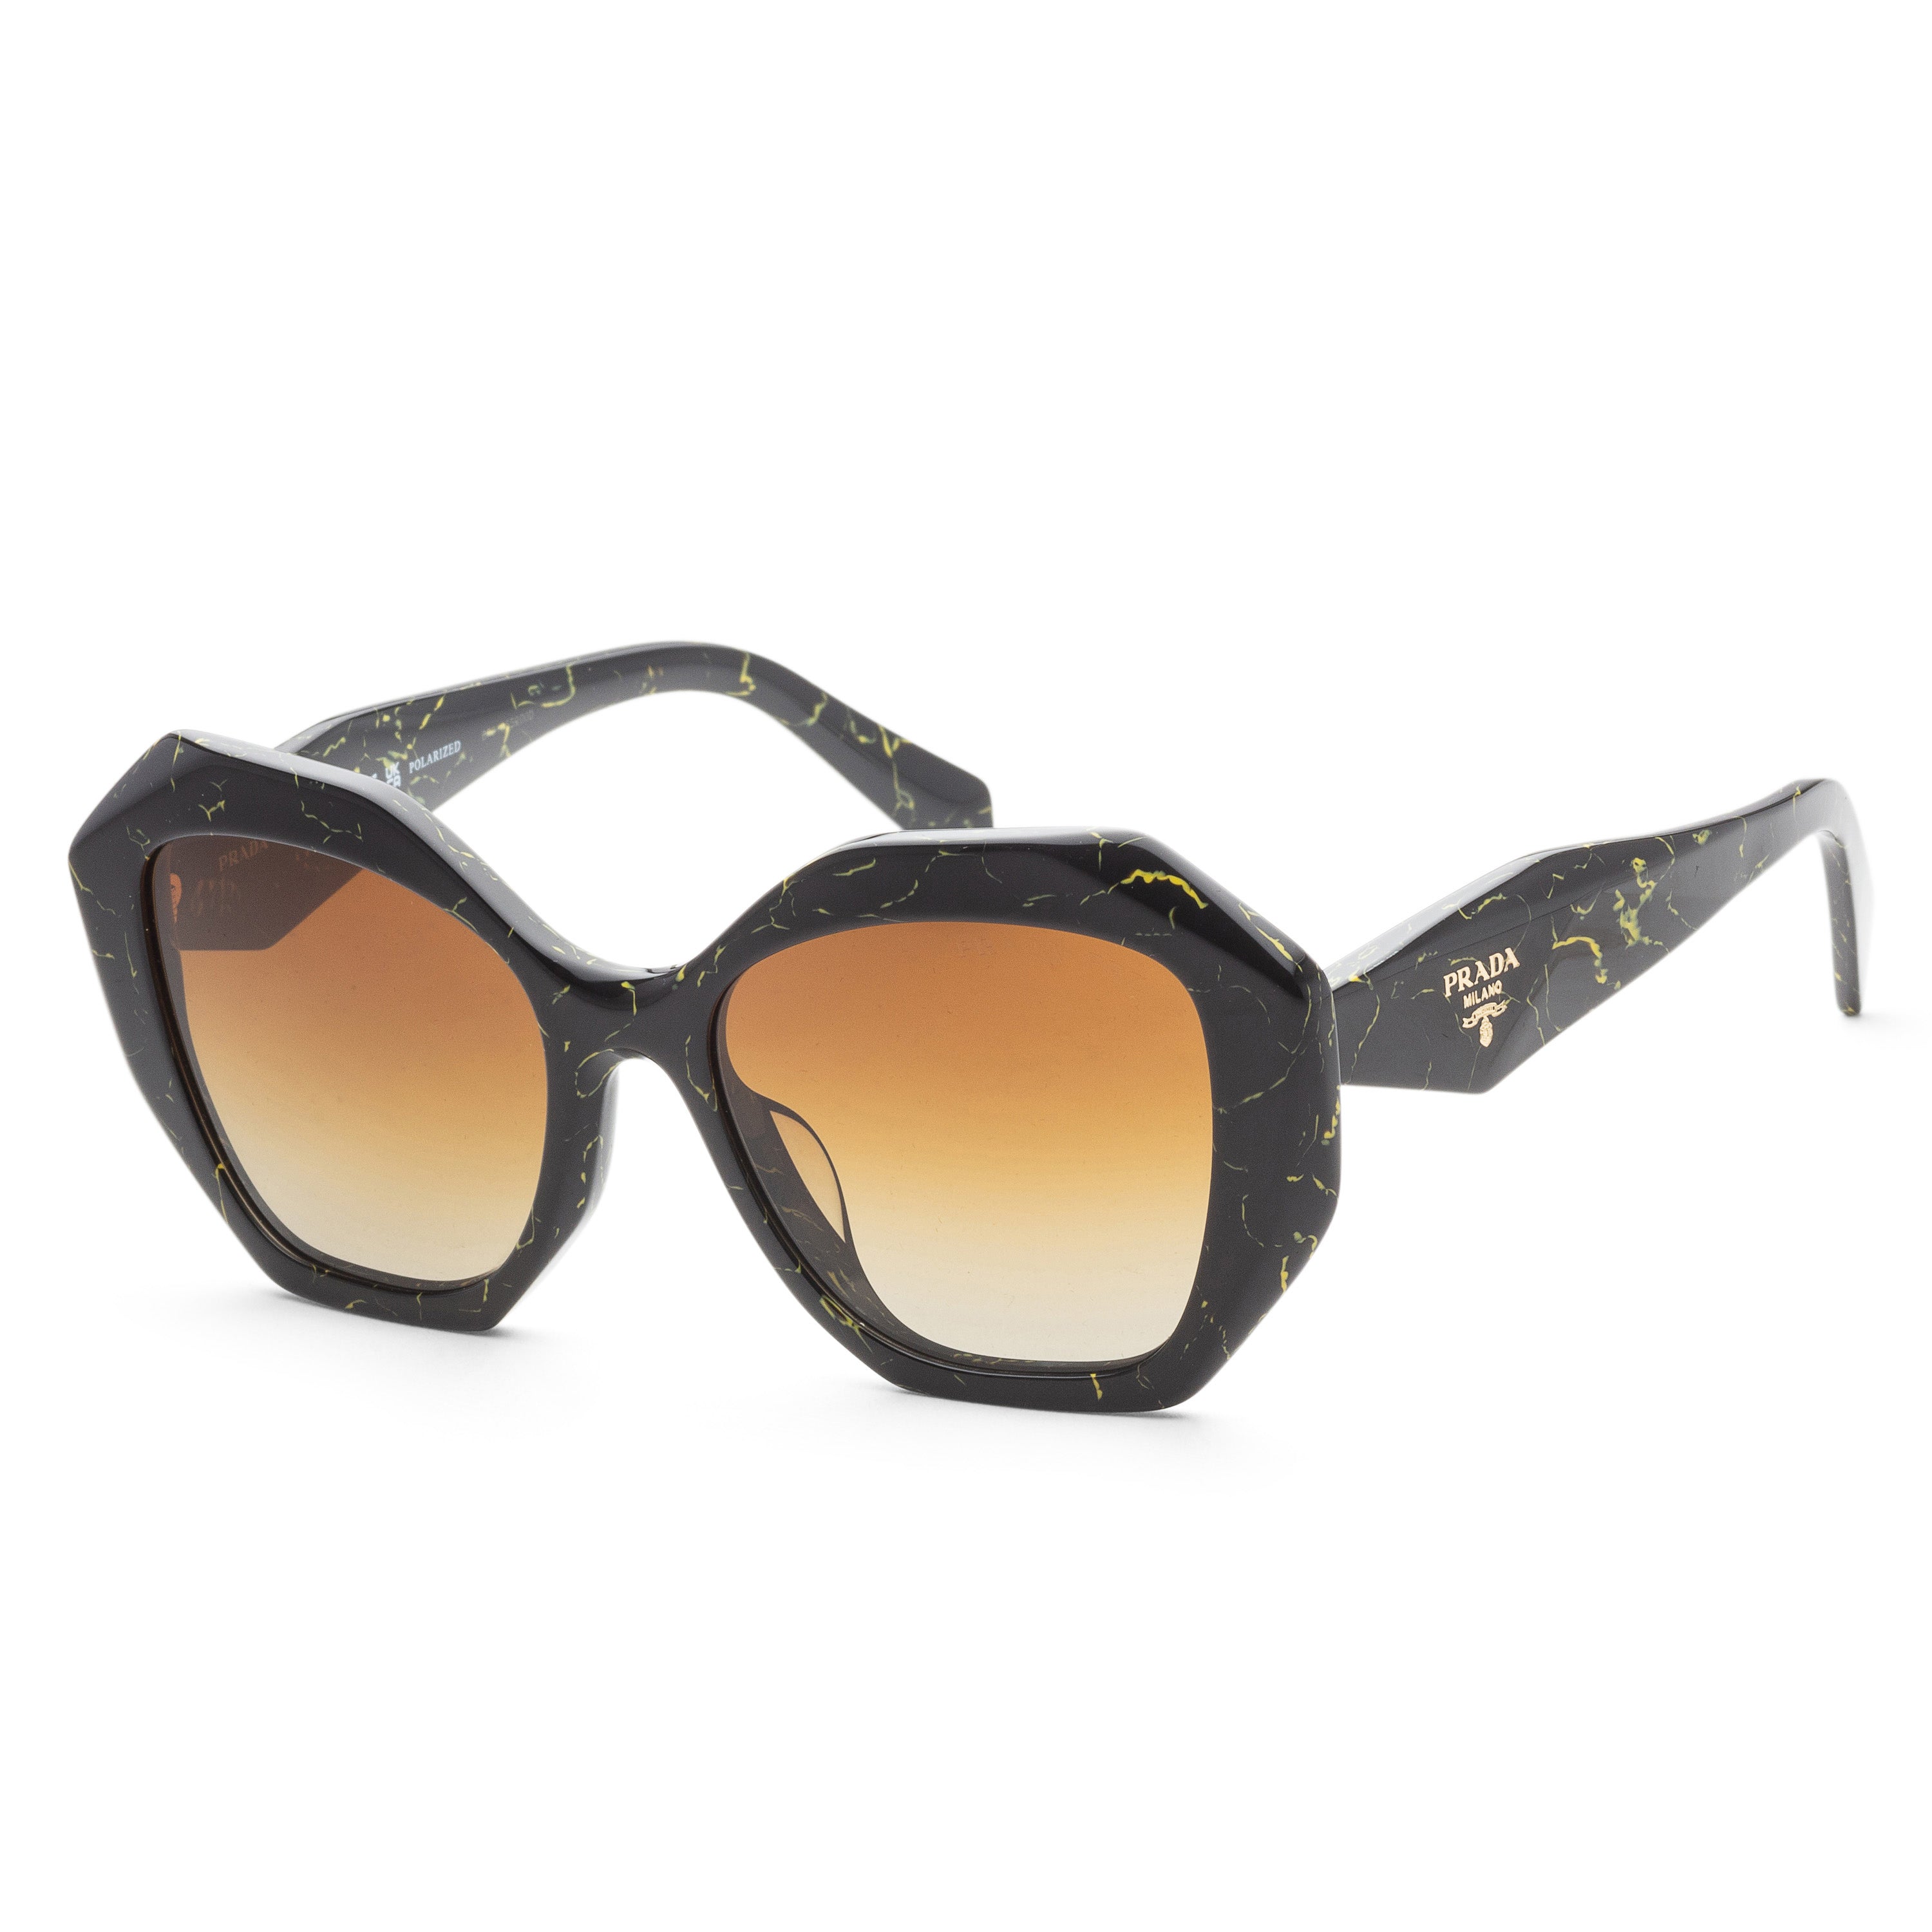 title:Prada Women's PR-16WSF-19D6E1 Fashion 53mm Black/Yellow Marble Sunglasses;color:Polar Brown Gradient Lens, Black/Yellow Marble Frame